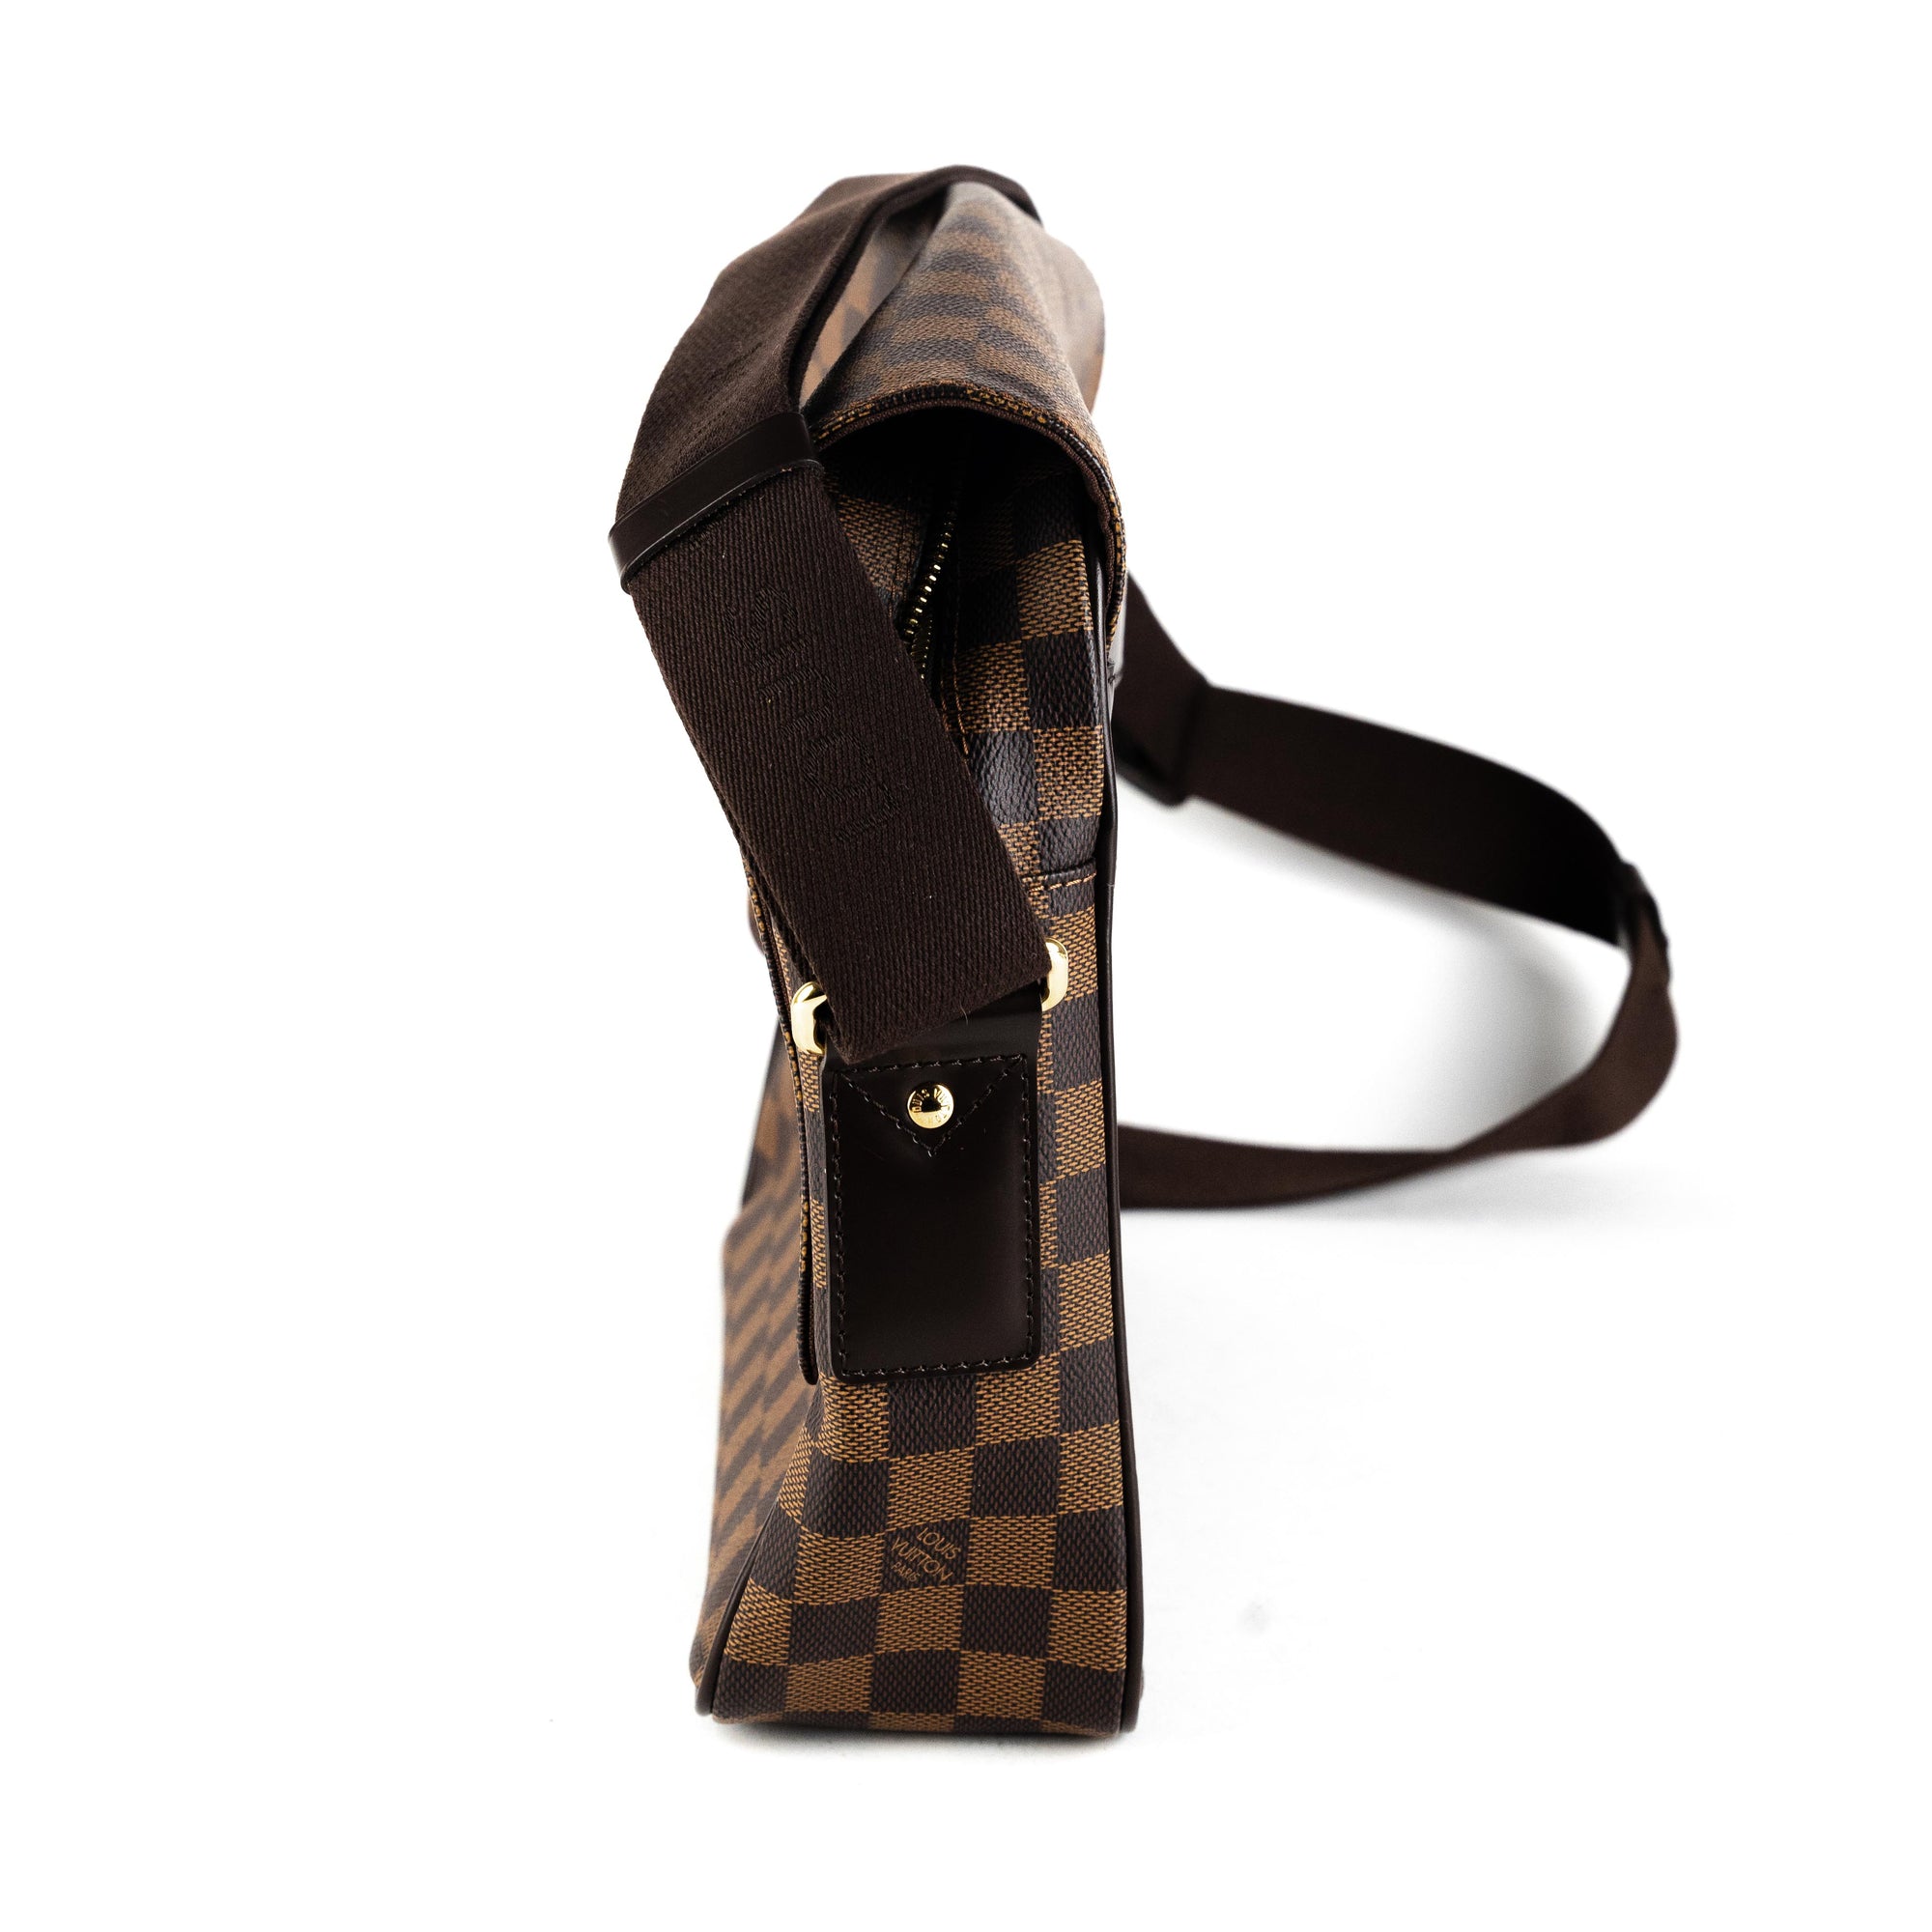 Louis Vuitton Damier Ebene Medium Shoulder Bag - THE PURSE AFFAIR